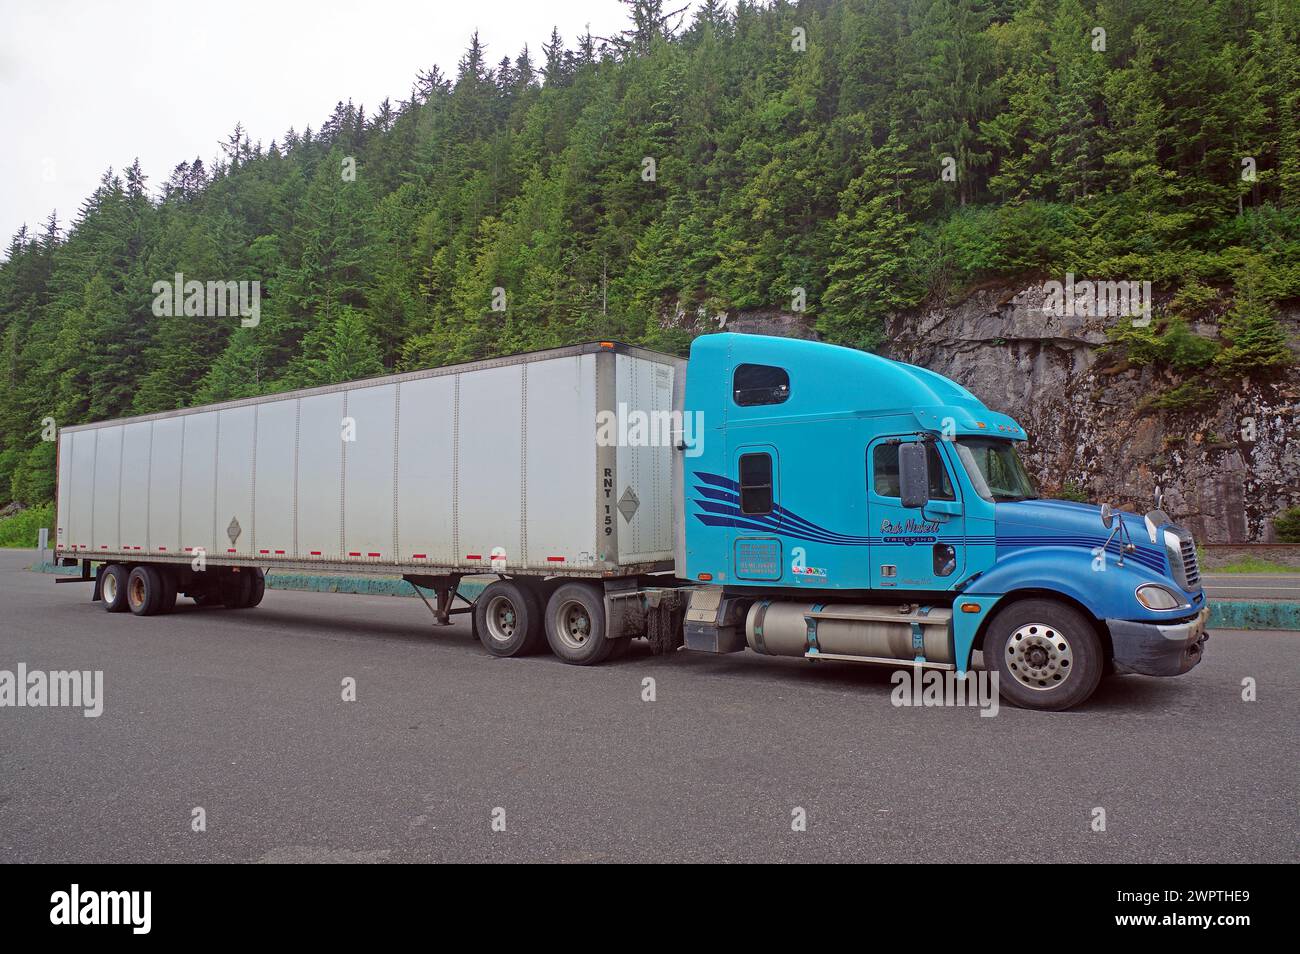 Giant truck with ten wheels, Truck, Yellowhead Highway, British Columbia, Canada Stock Photo